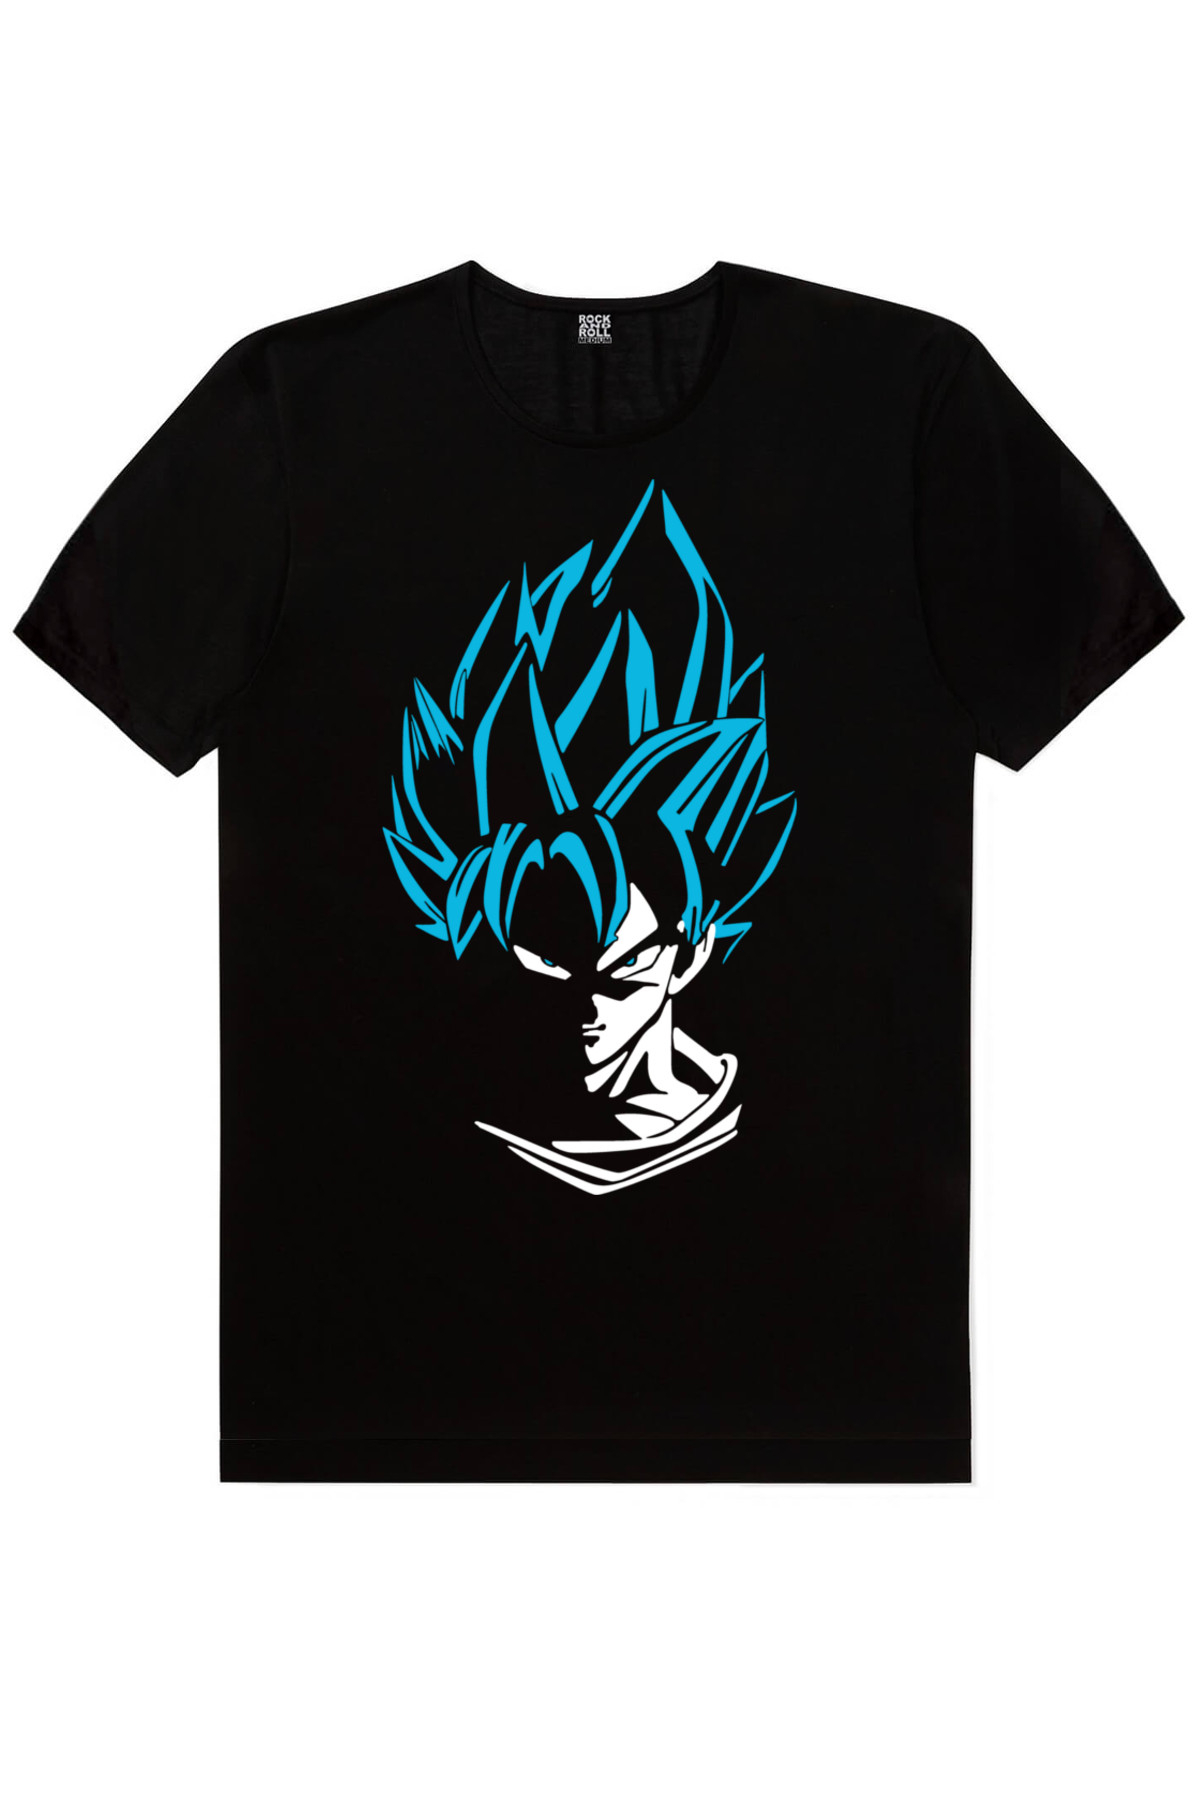 Manga Boy, Mavi Saçlı Kahraman, Hep Anime Erkek 3'lü Eko Paket T-shirt